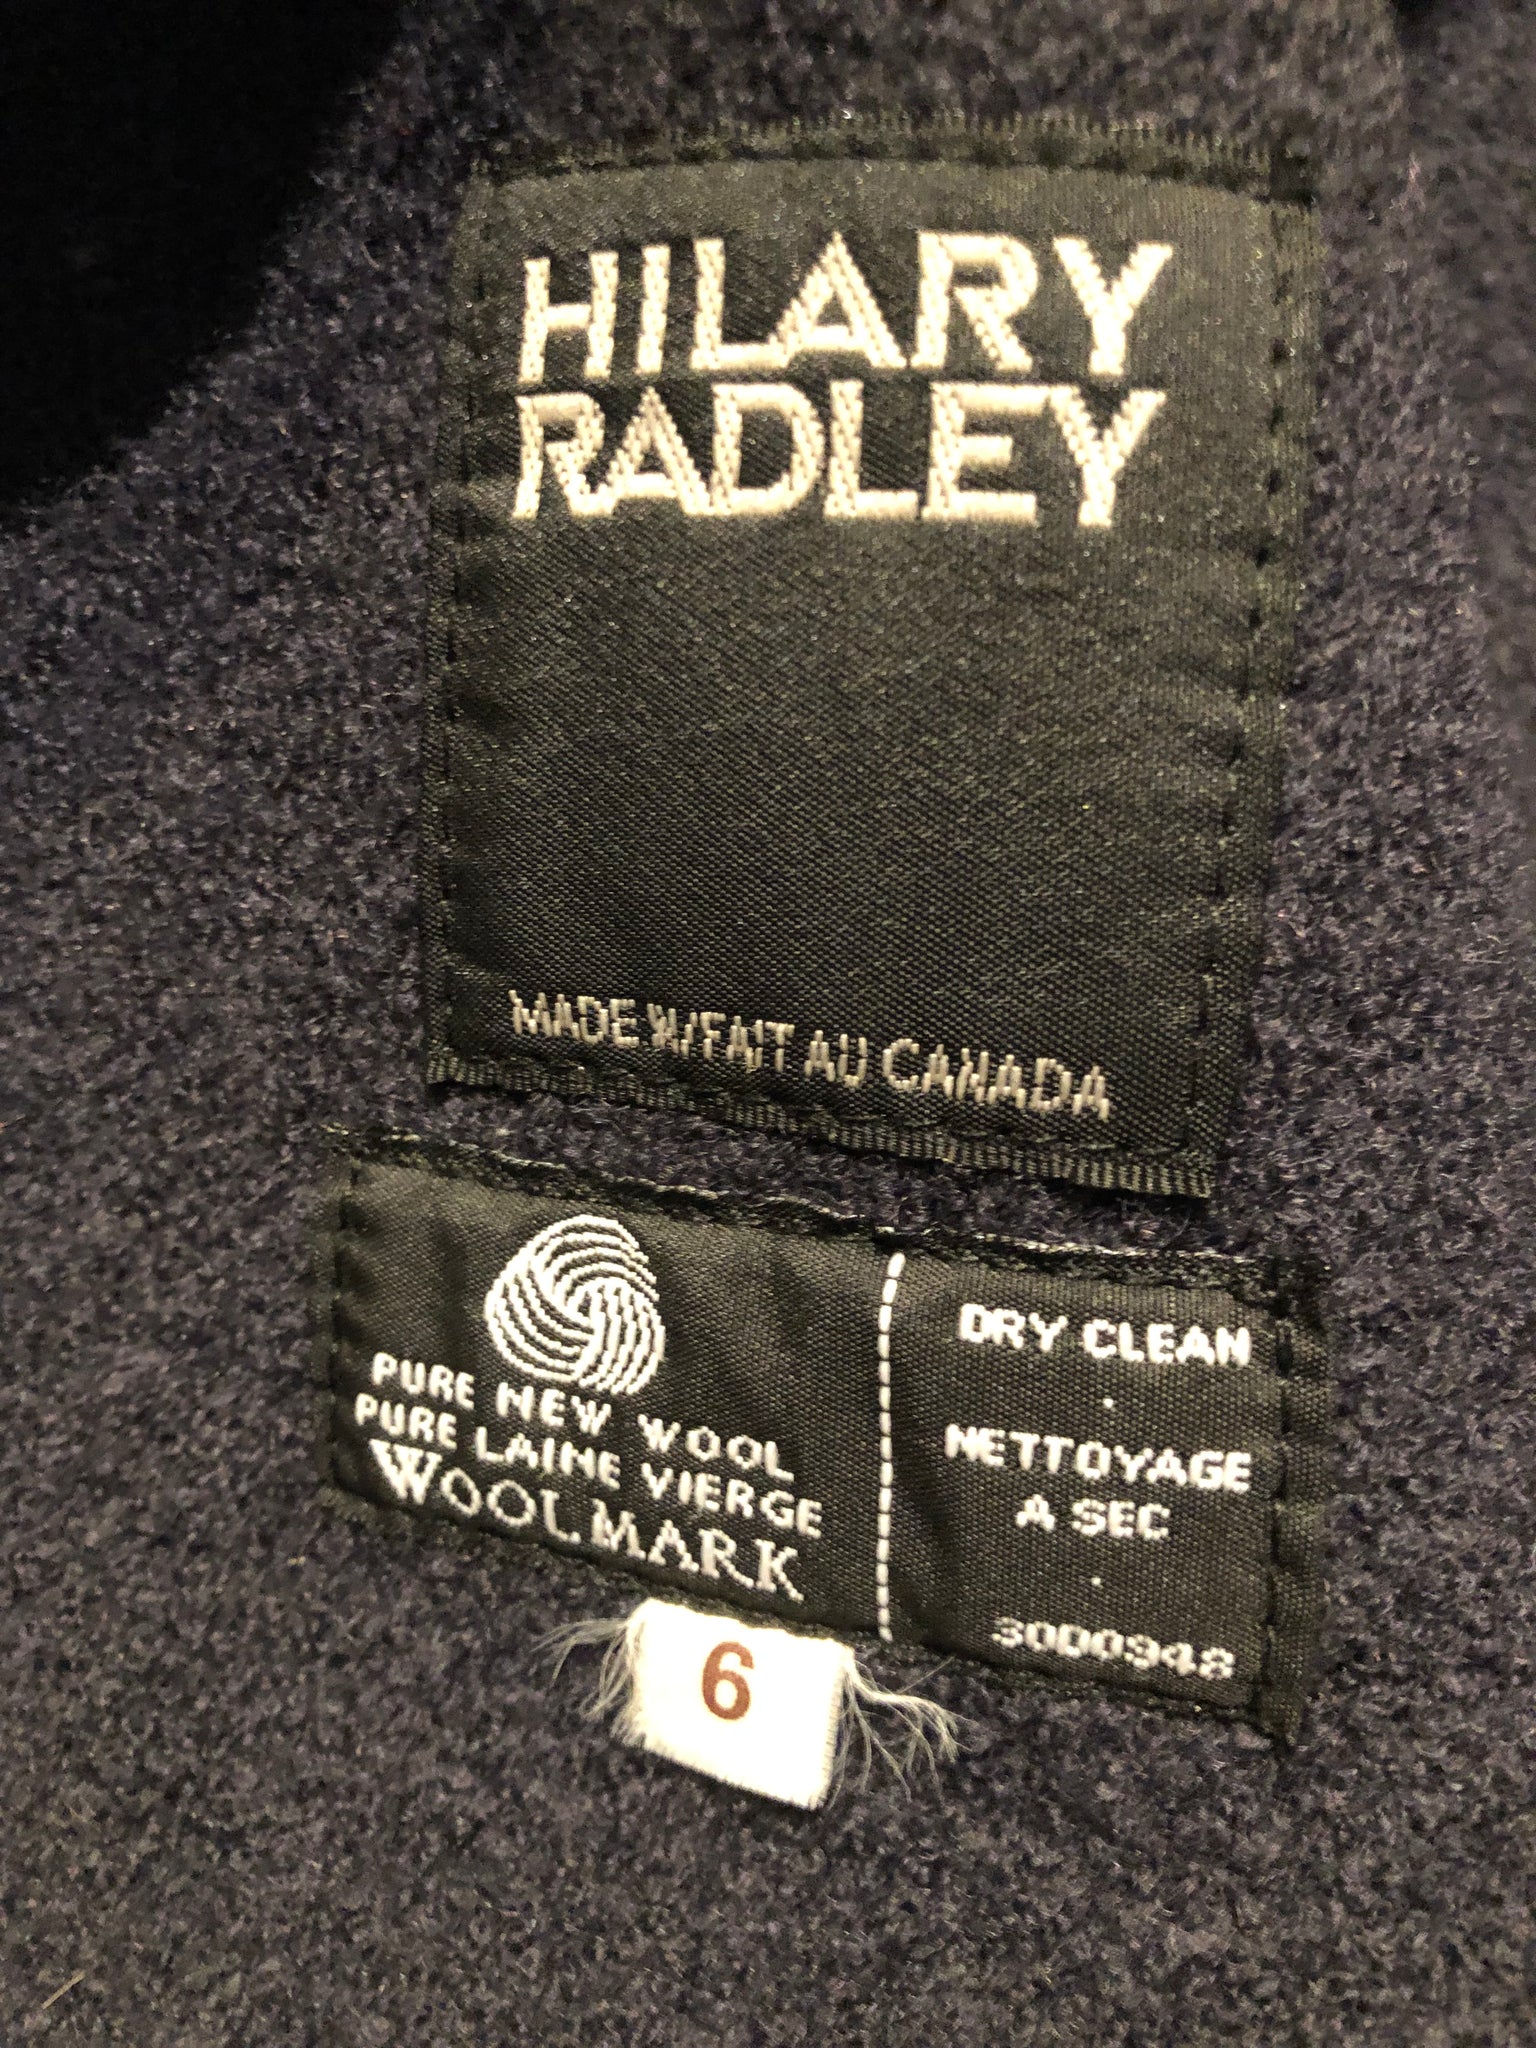 Hilary Radley Coat -  Canada